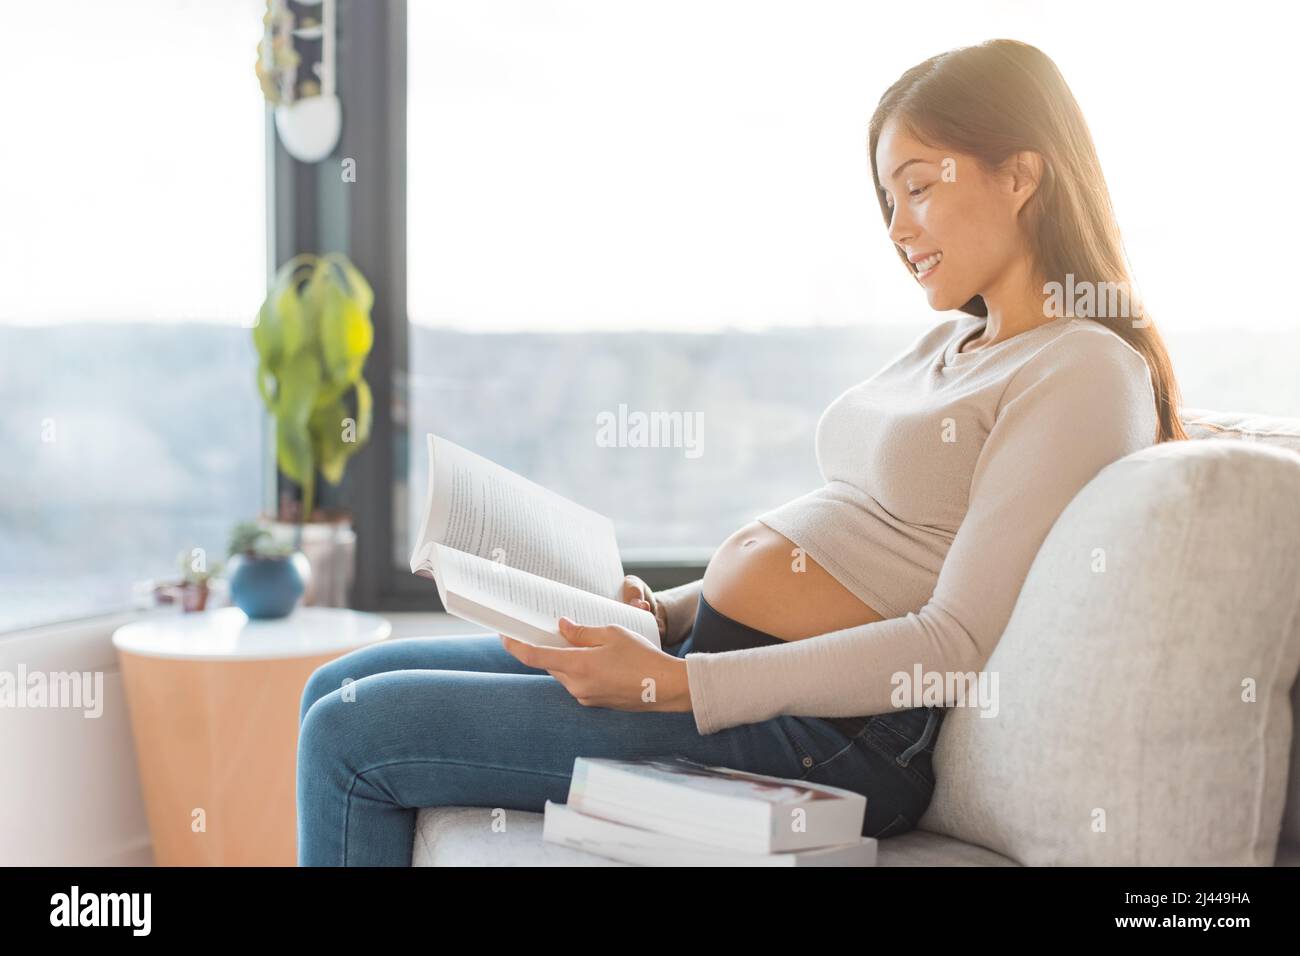 Pregnant Asian woman reading prenatal books preparing for labor, birth, newborn, sitting on sofa at home. Pregnancy lifestyle Stock Photo